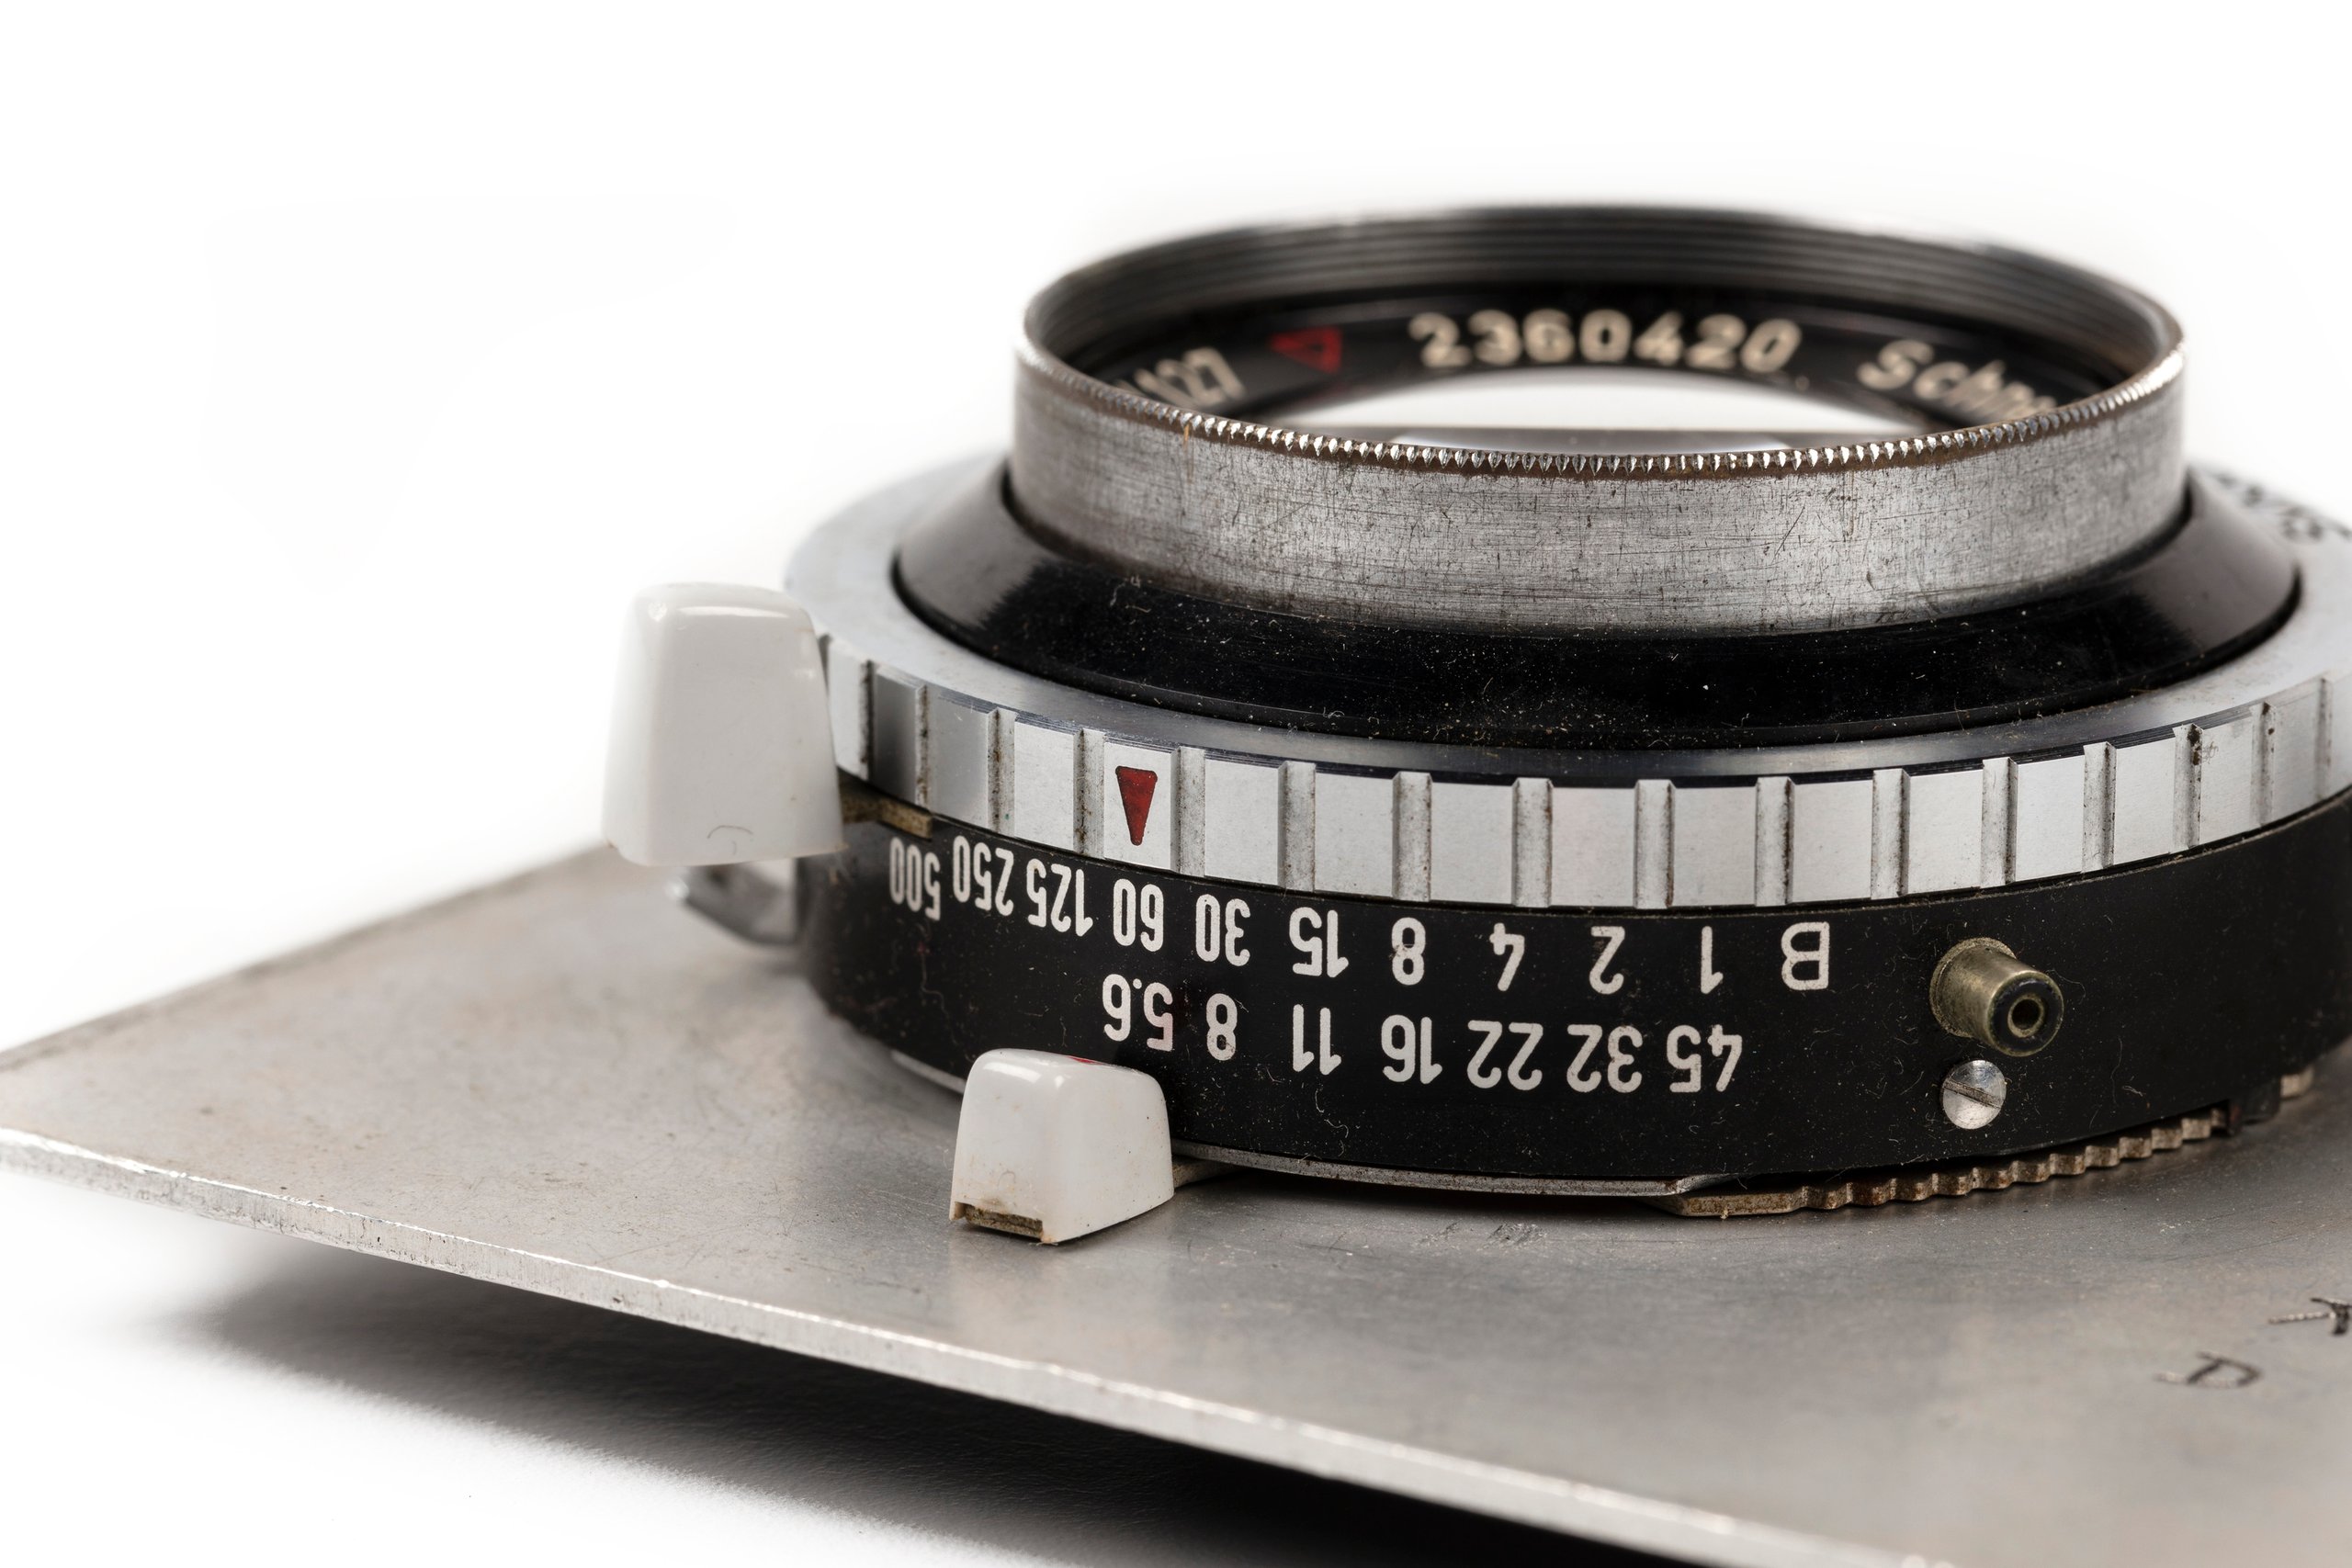 Lens for 'Linhof Technika' camera